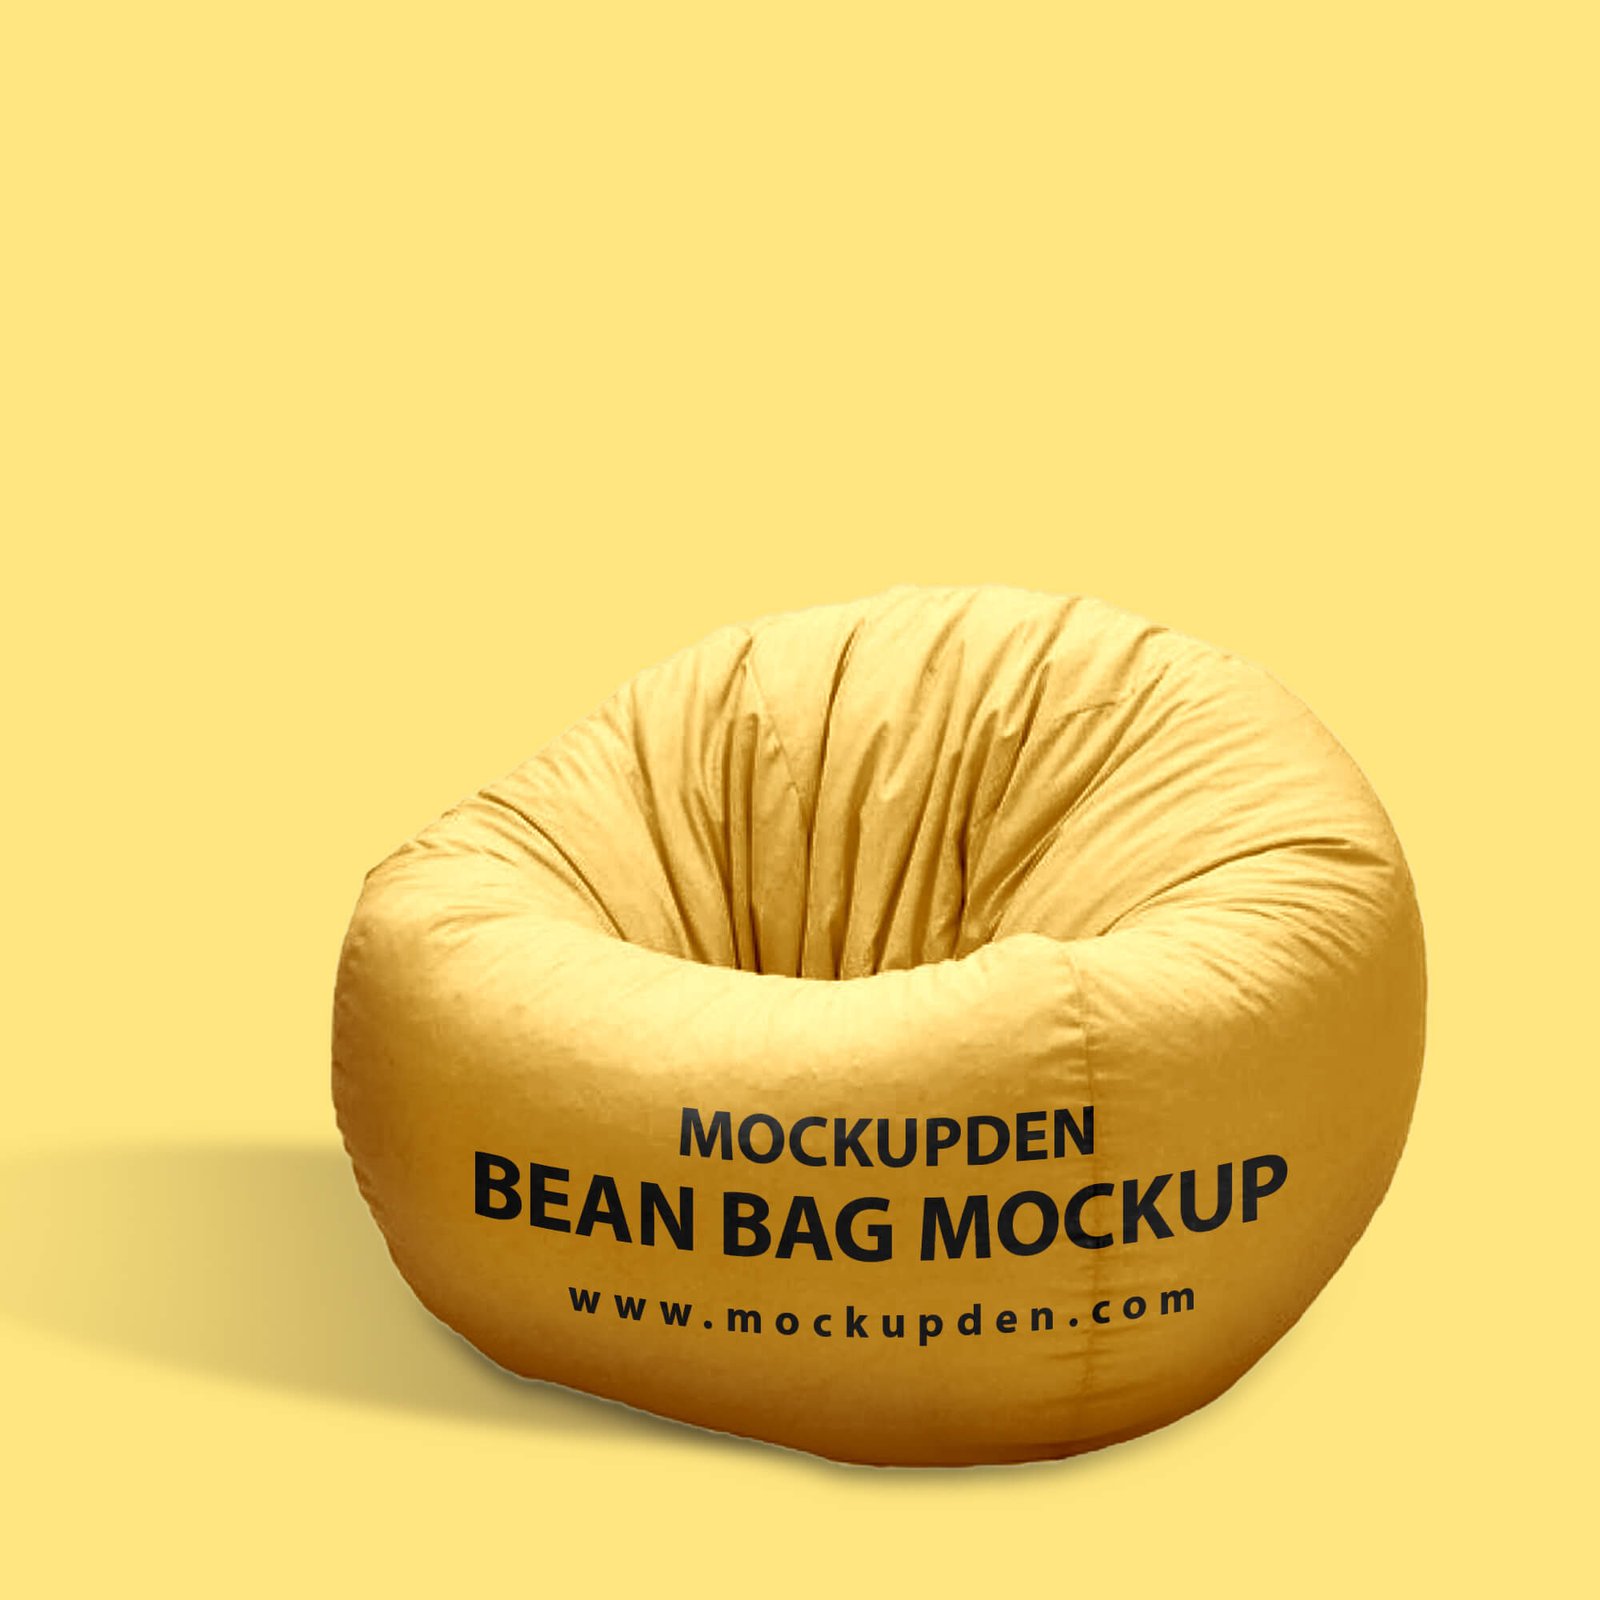 Design Free Bean Bag Mockup PSD Template